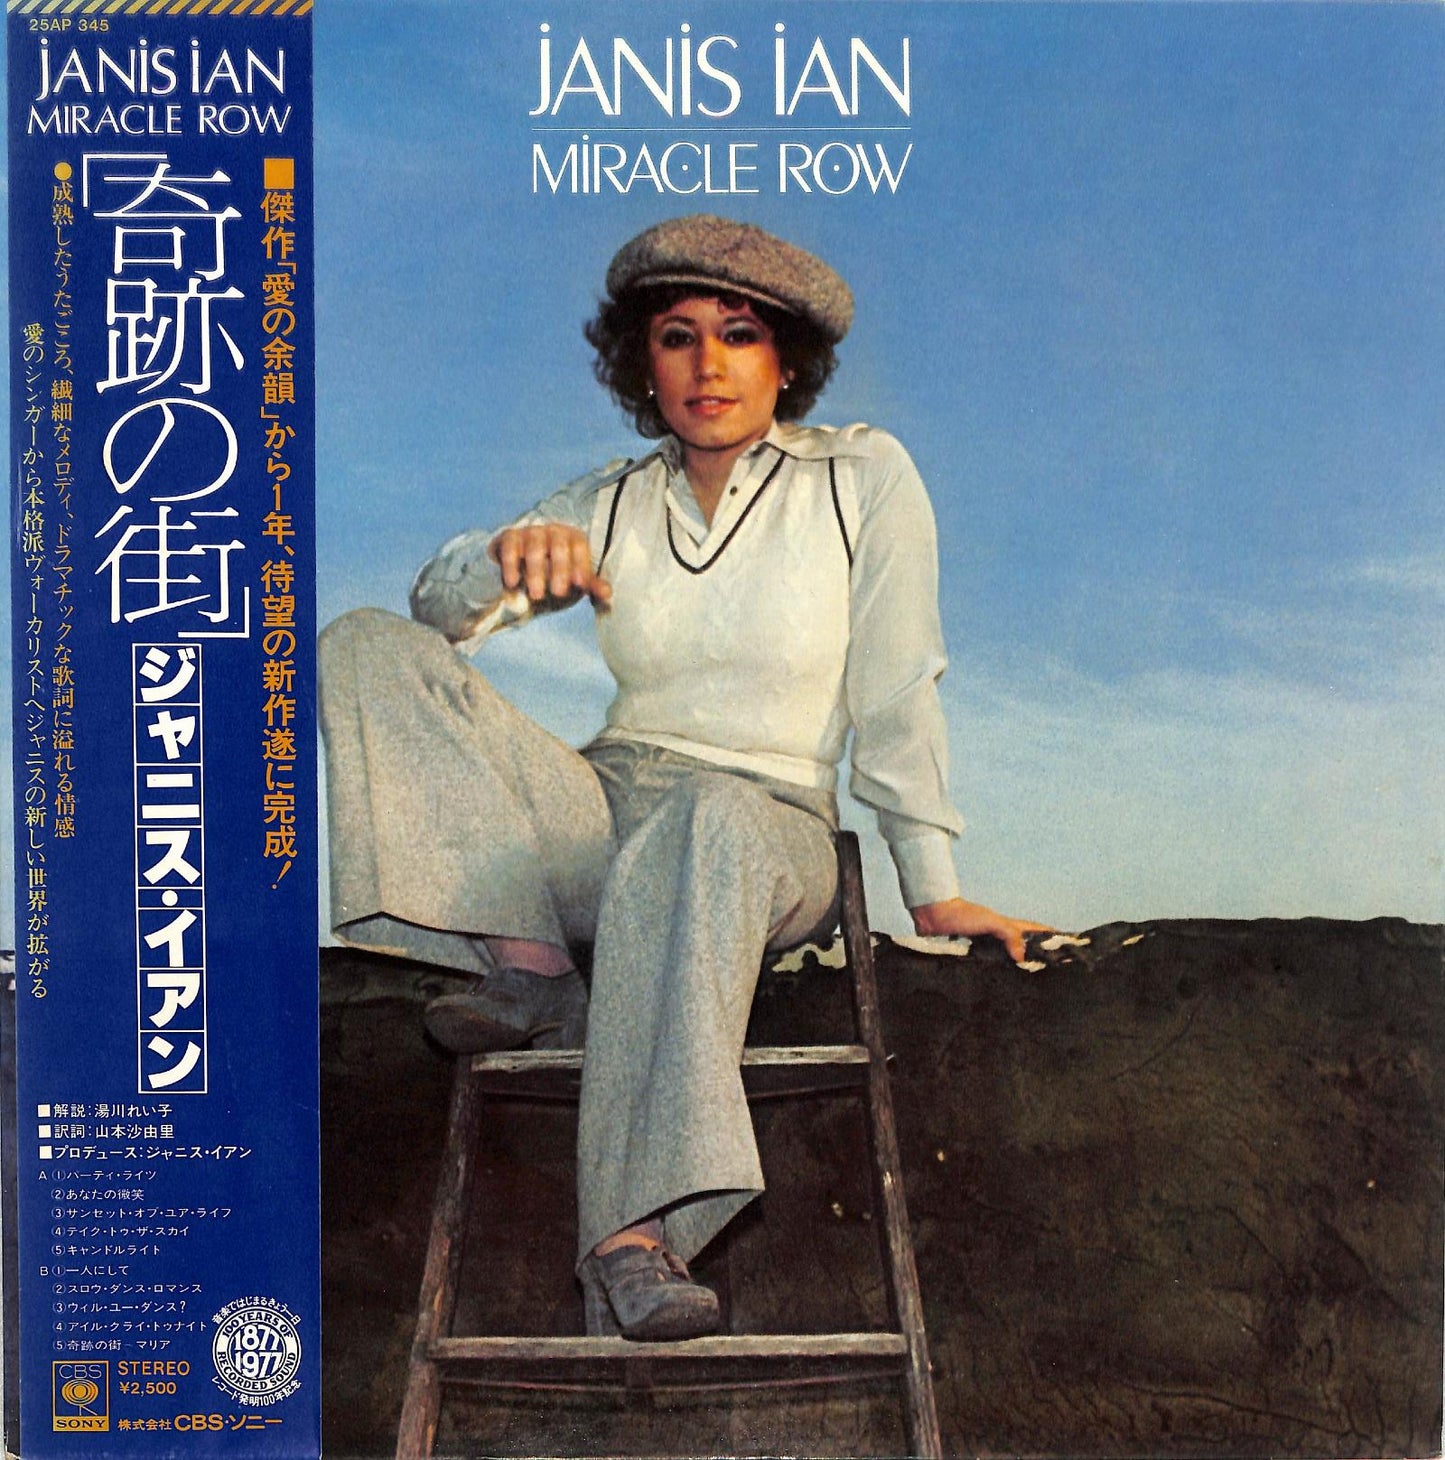 JANIS IAN - Miracle Row